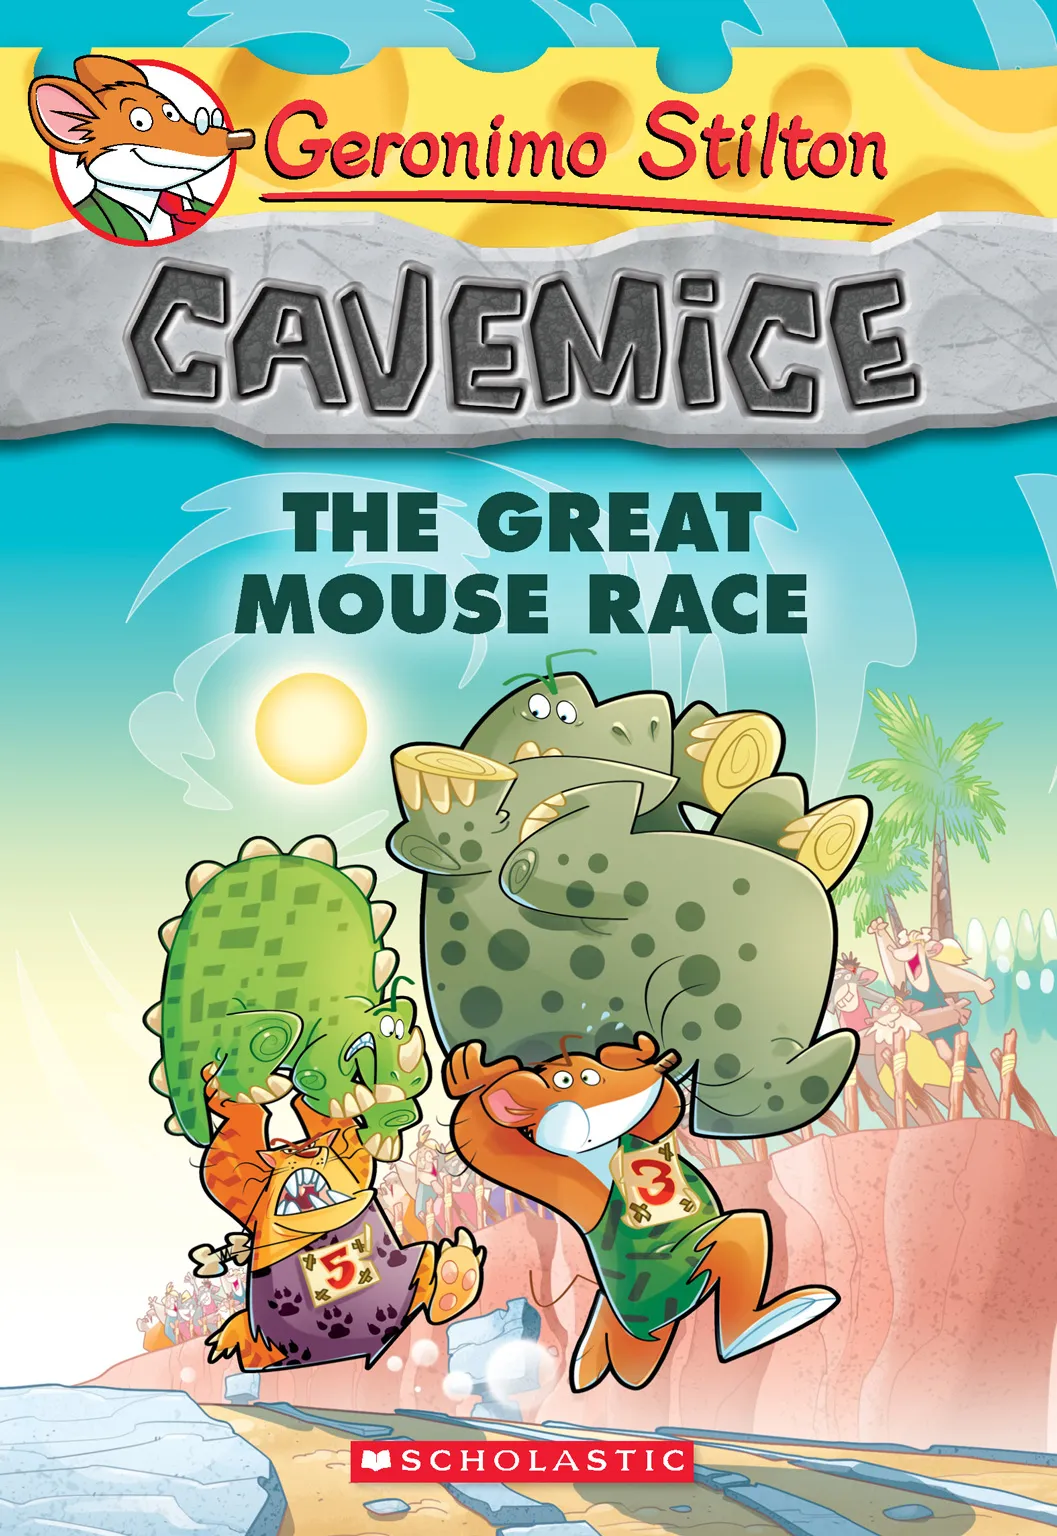 The Great Mouse Race (Geronimo Stilton Cavemice #5)